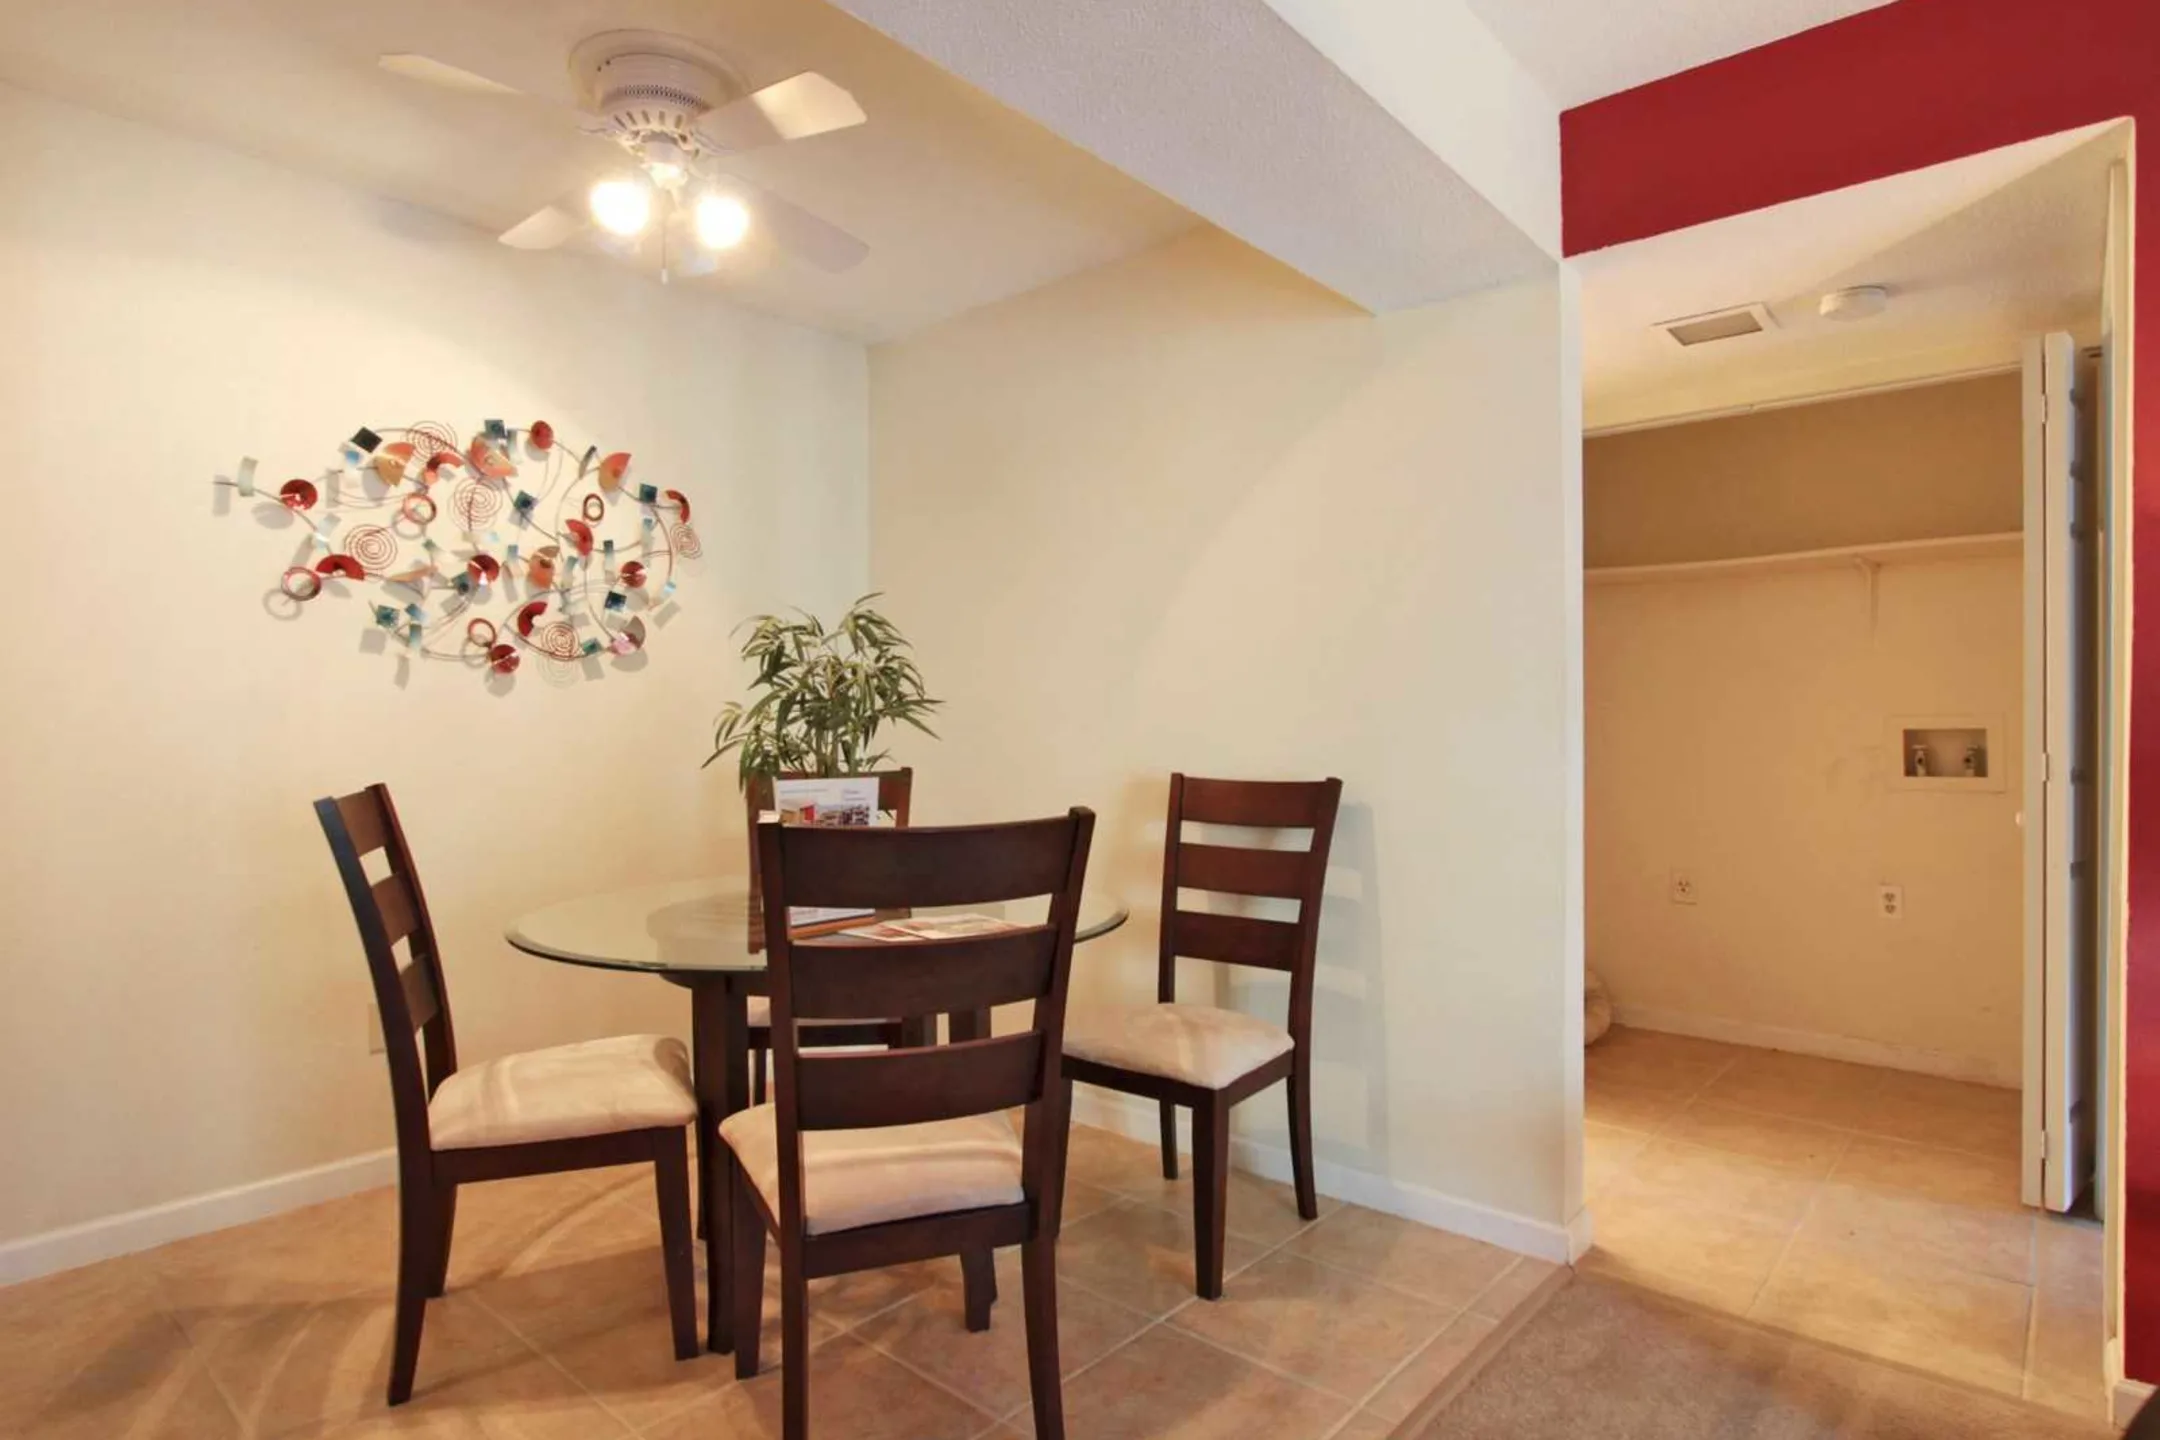 Dining Room - Devonwood Apartment Homes - Charlotte, NC